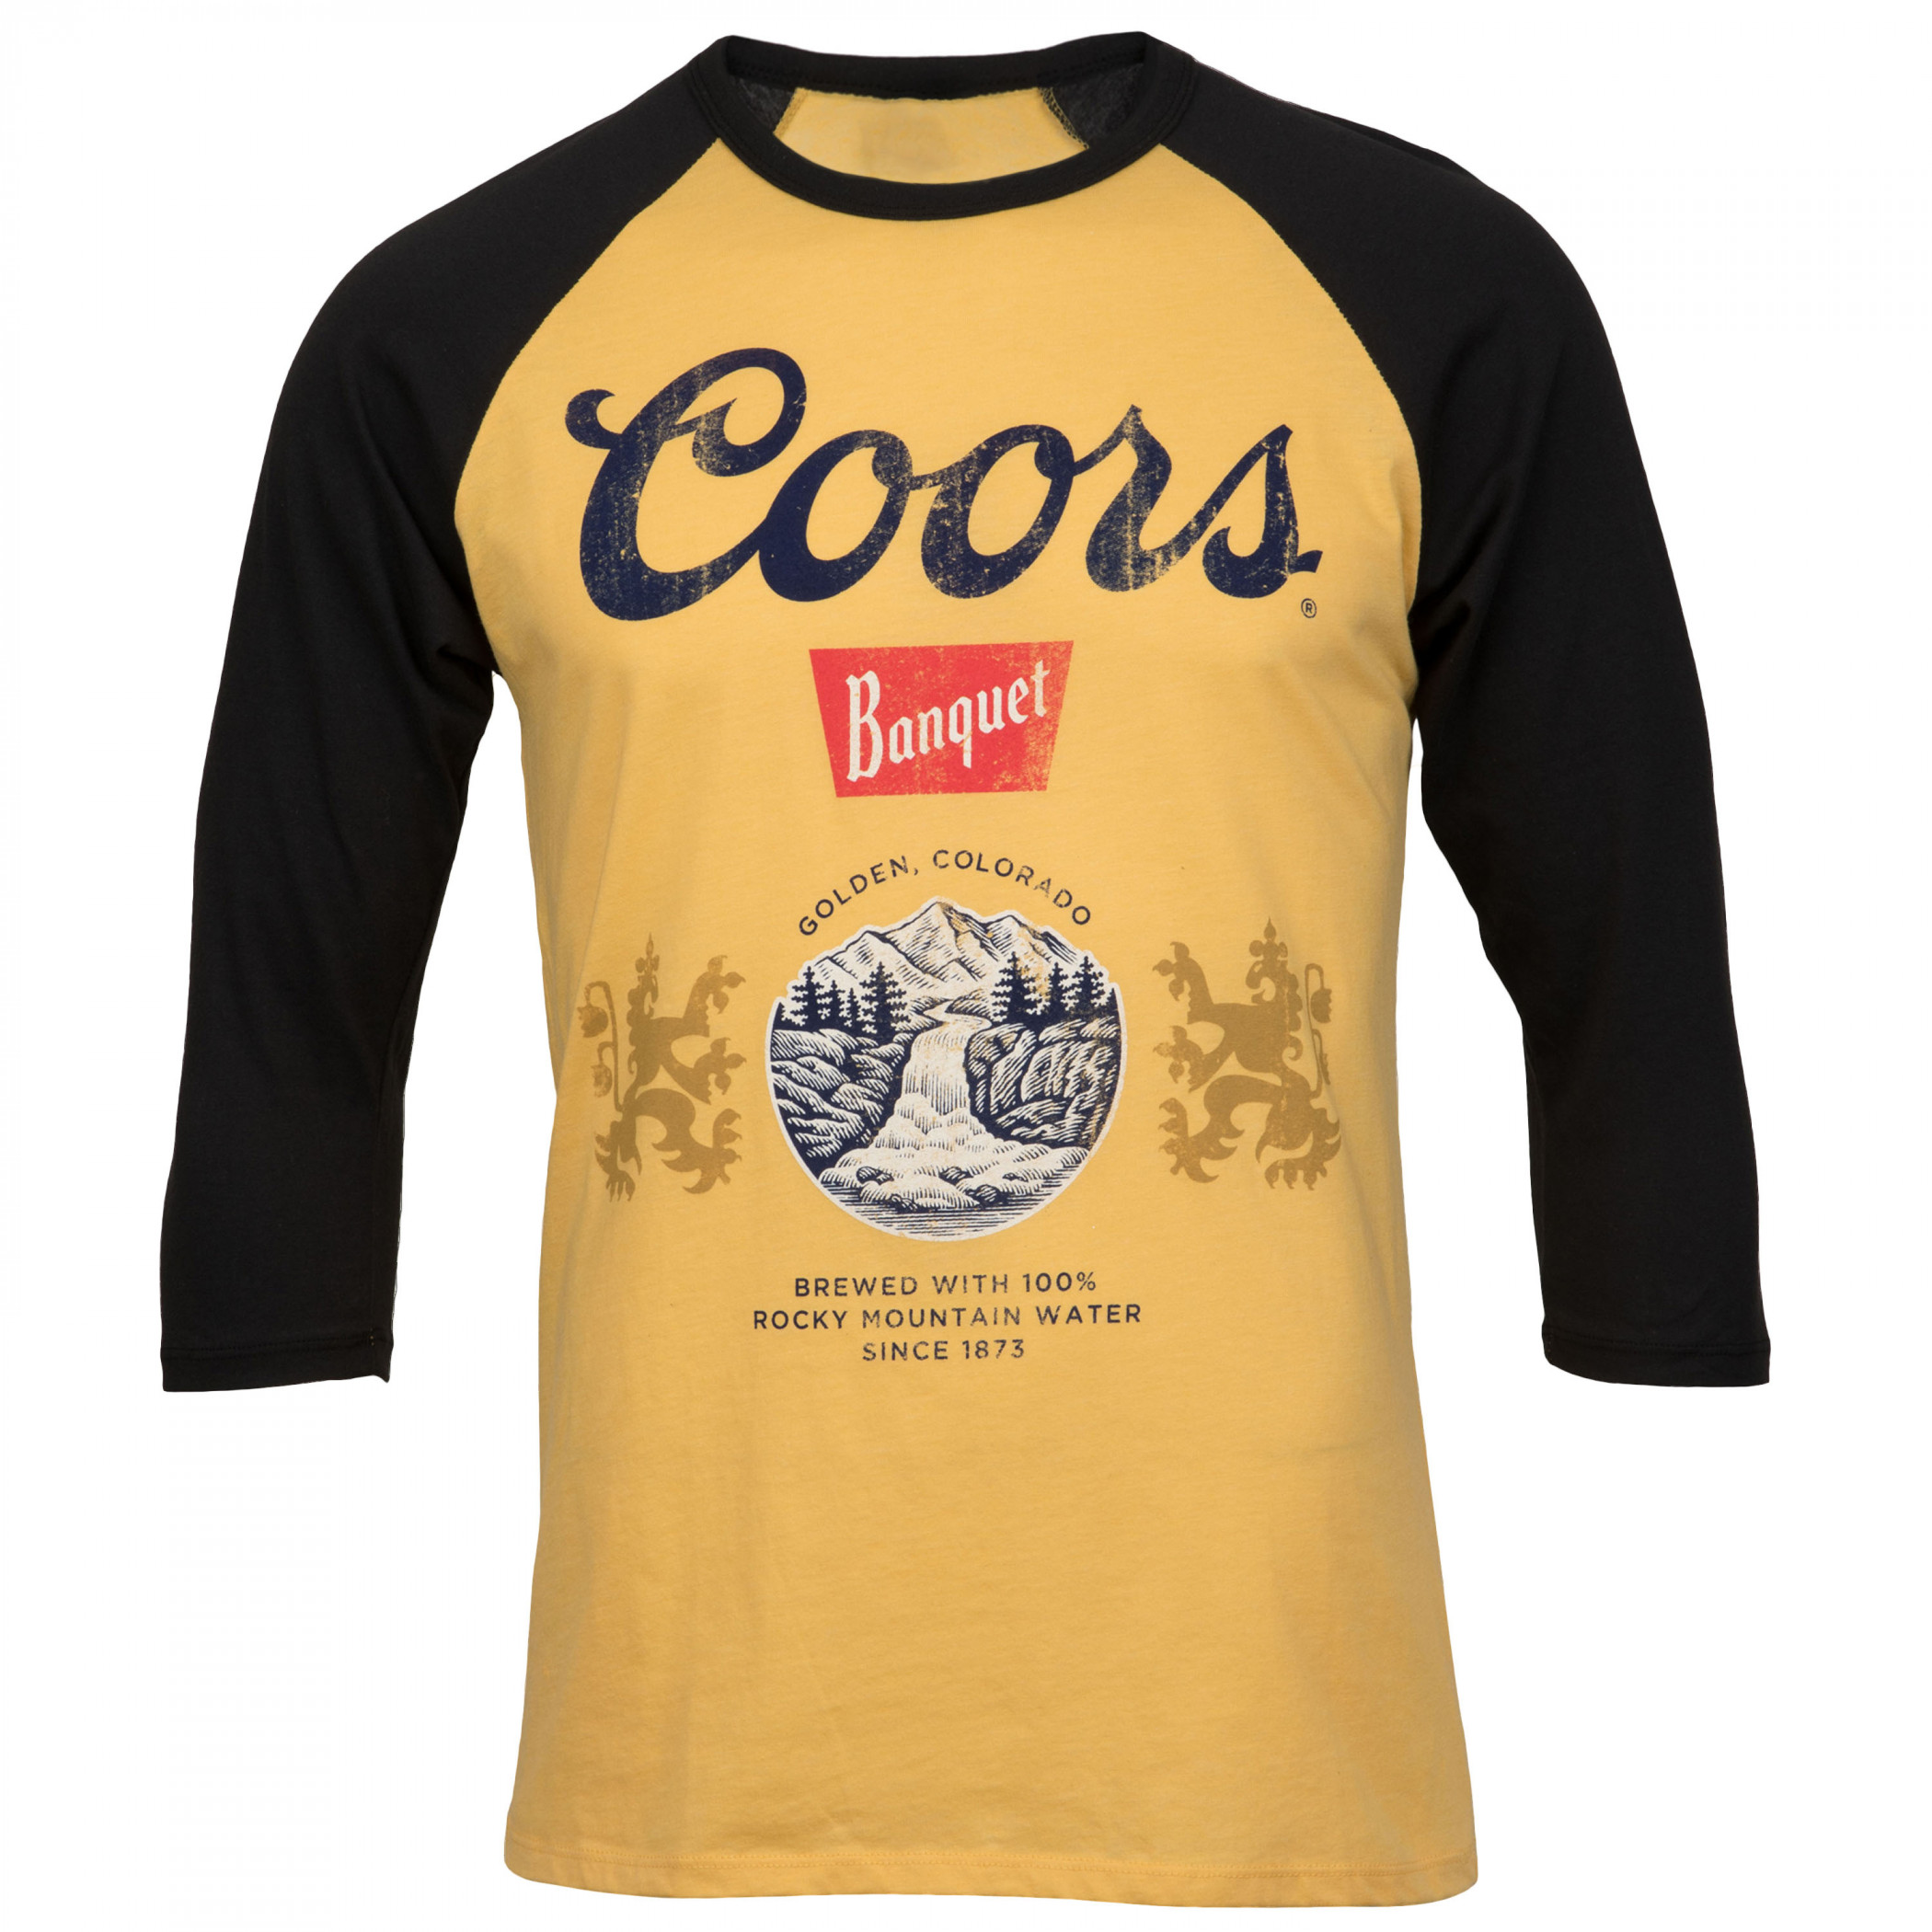 Coors Banquet Black and Gold Raglan Shirt